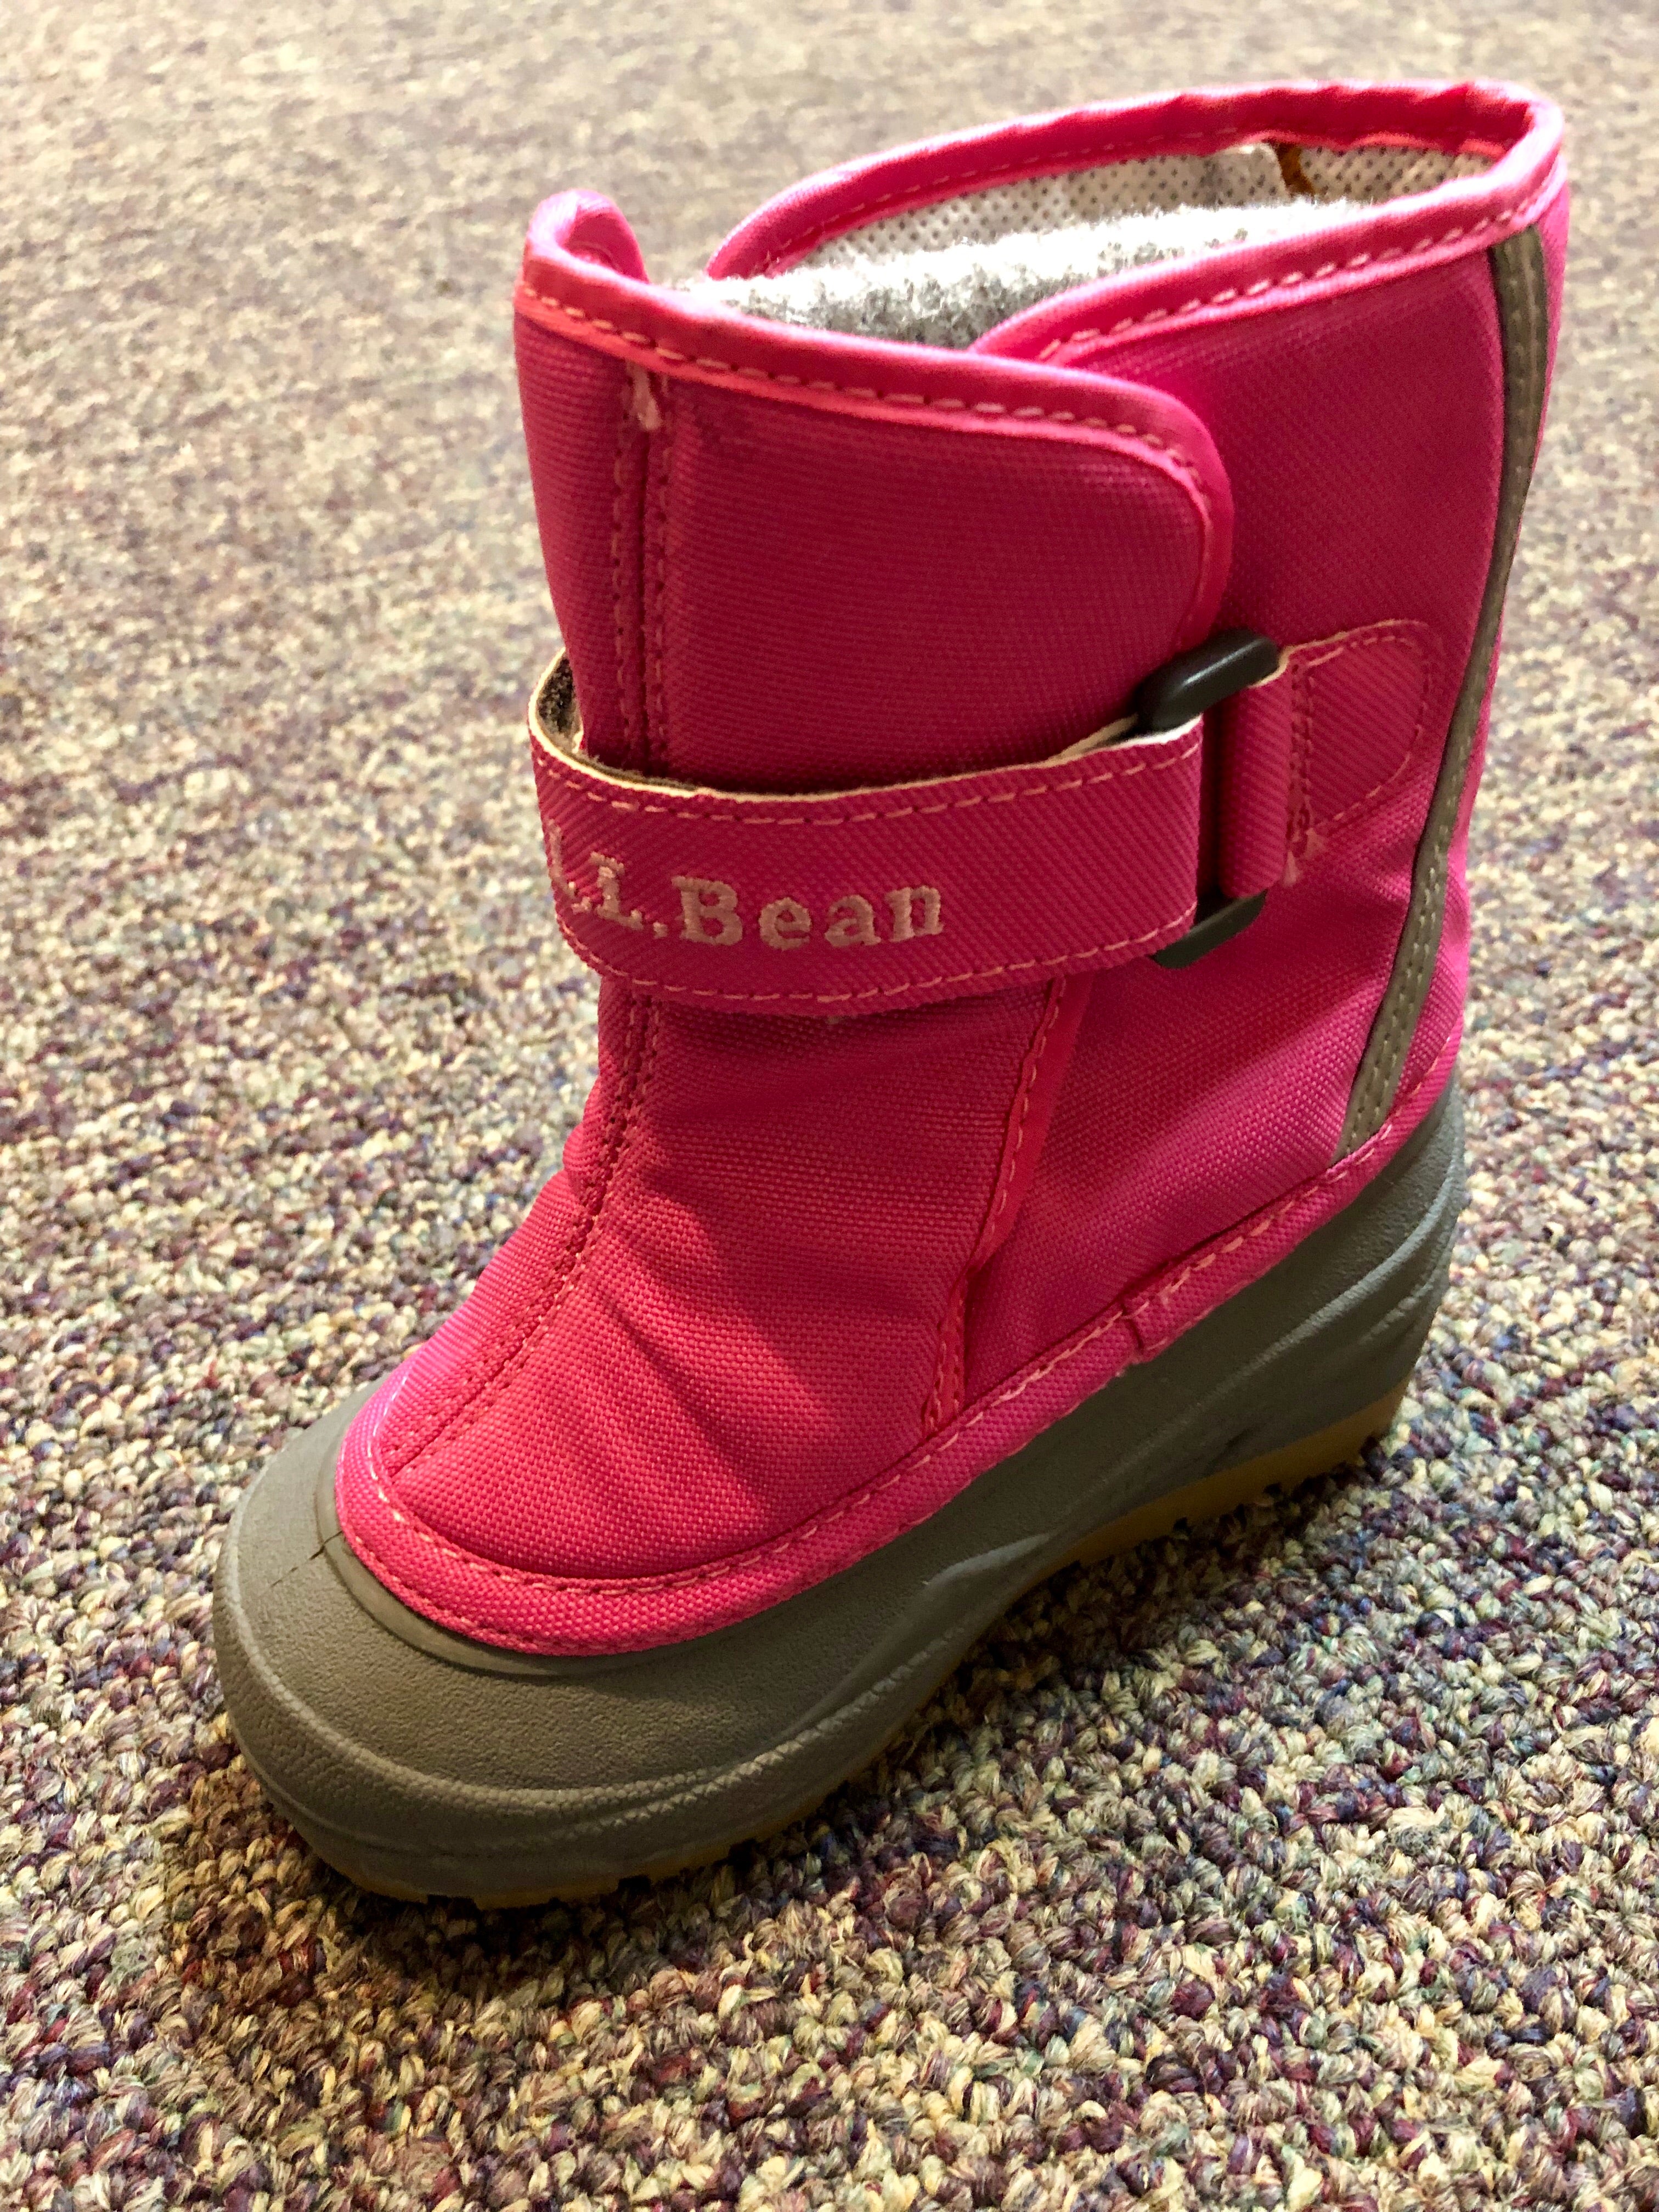 Toddler Size 8 L.L.Bean Snow Boots